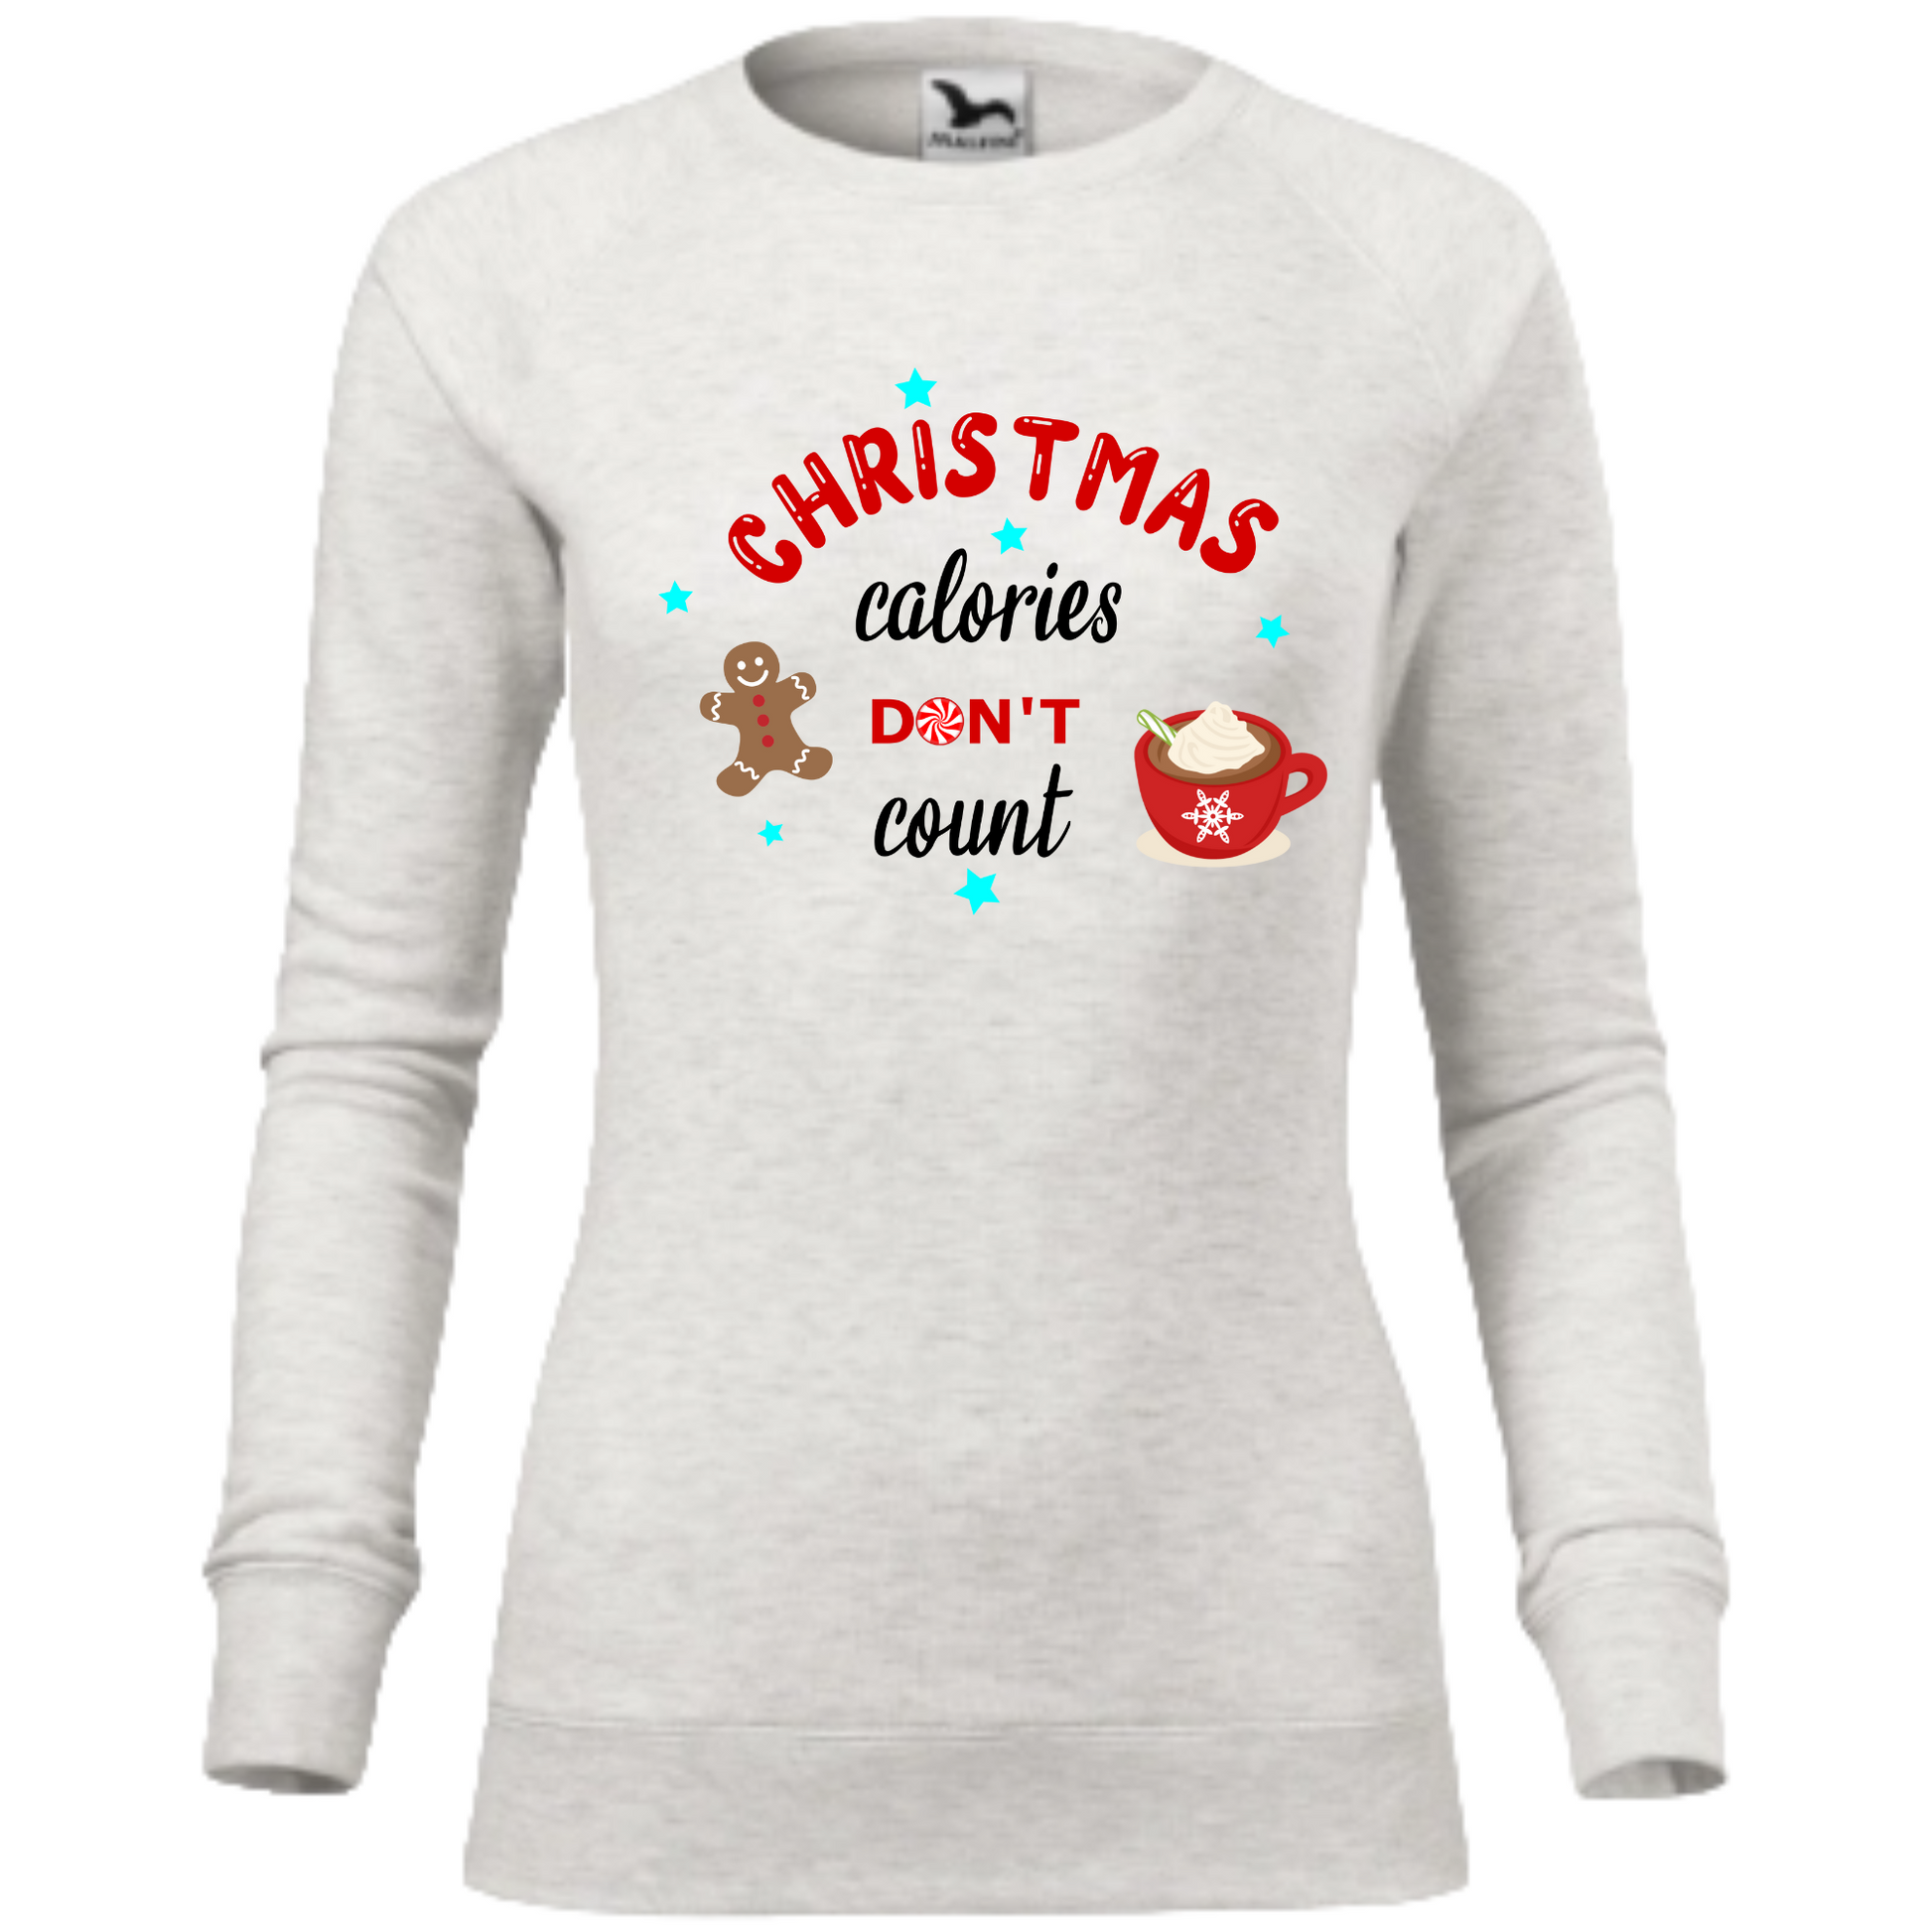 Bluza personalizata Craciun cu textul Christmas calories don't count.